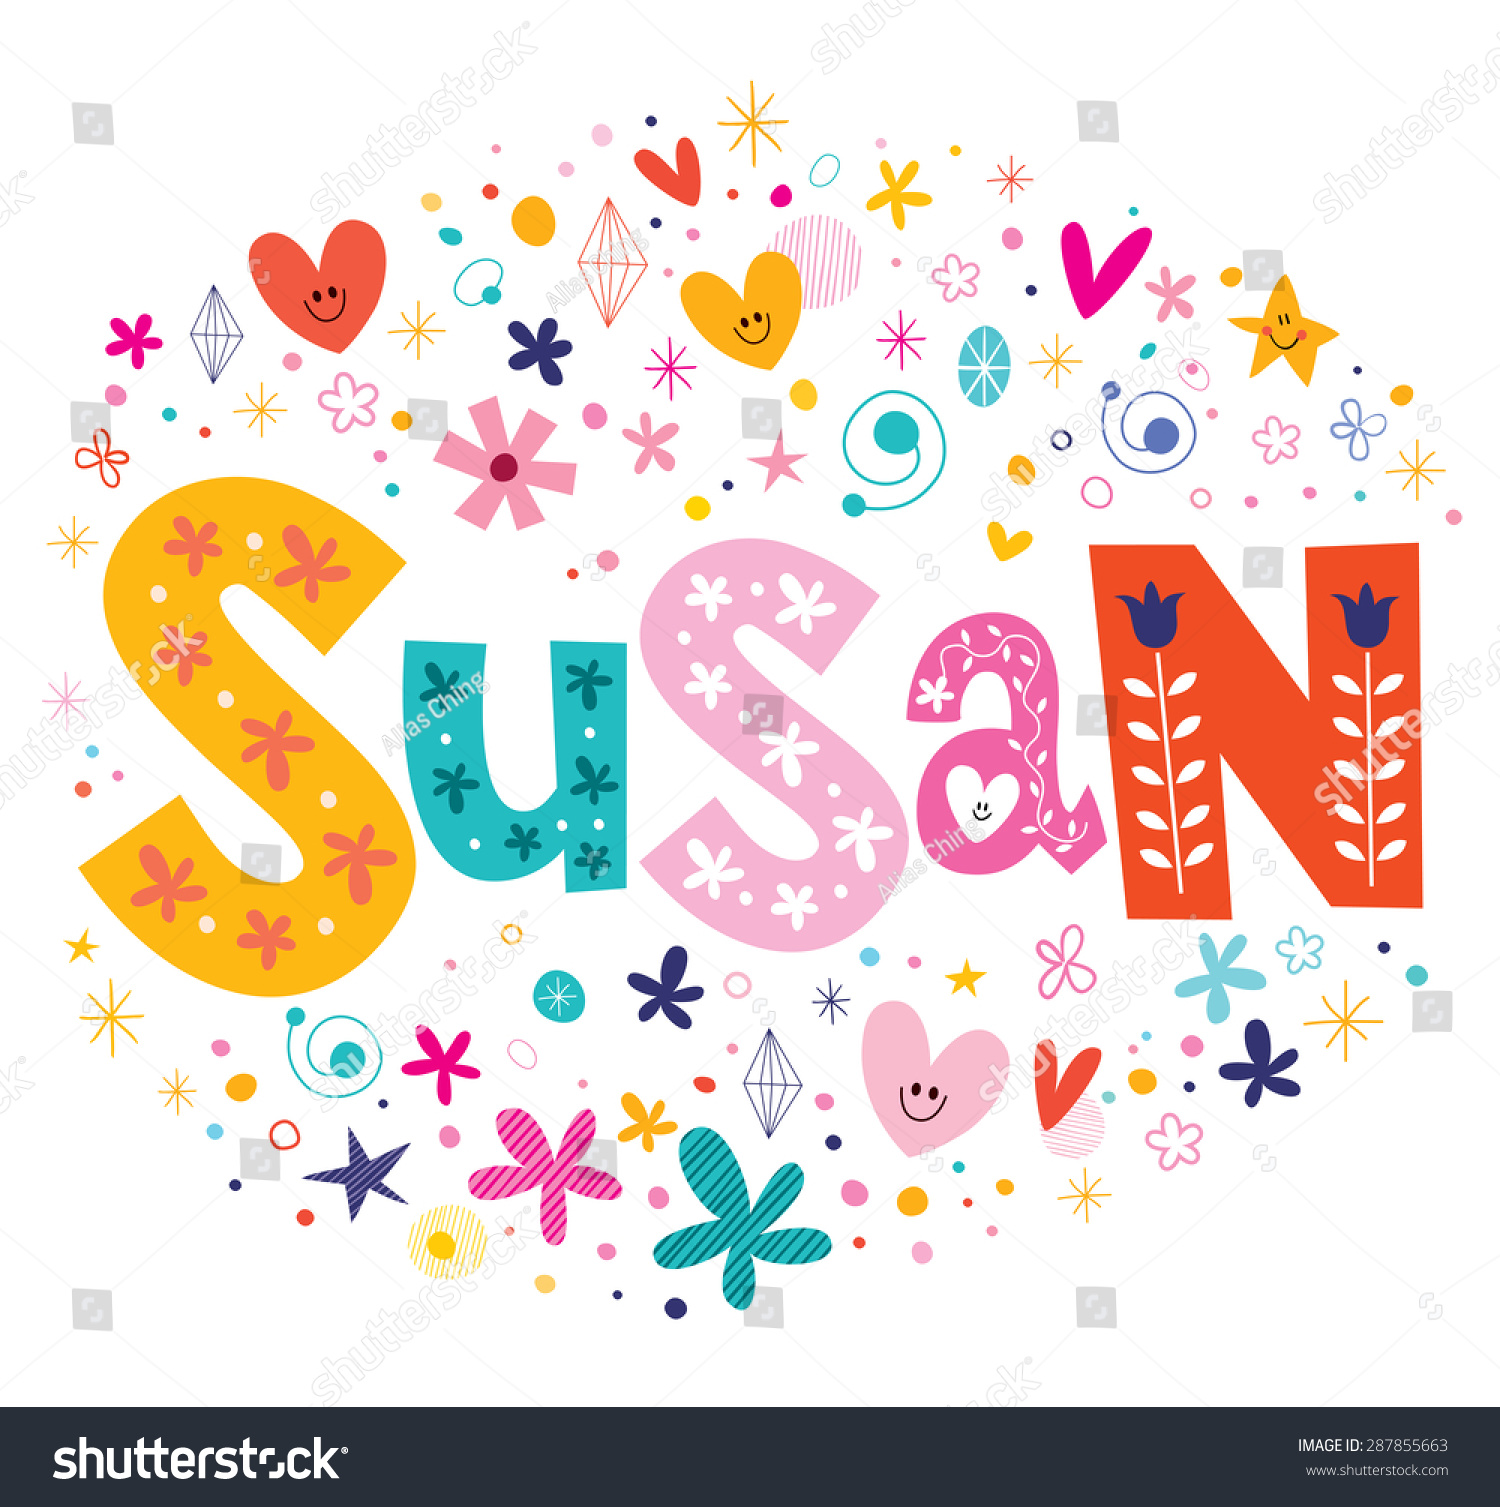 Susan name image Images, Stock Photos & Vectors | Shutterstock